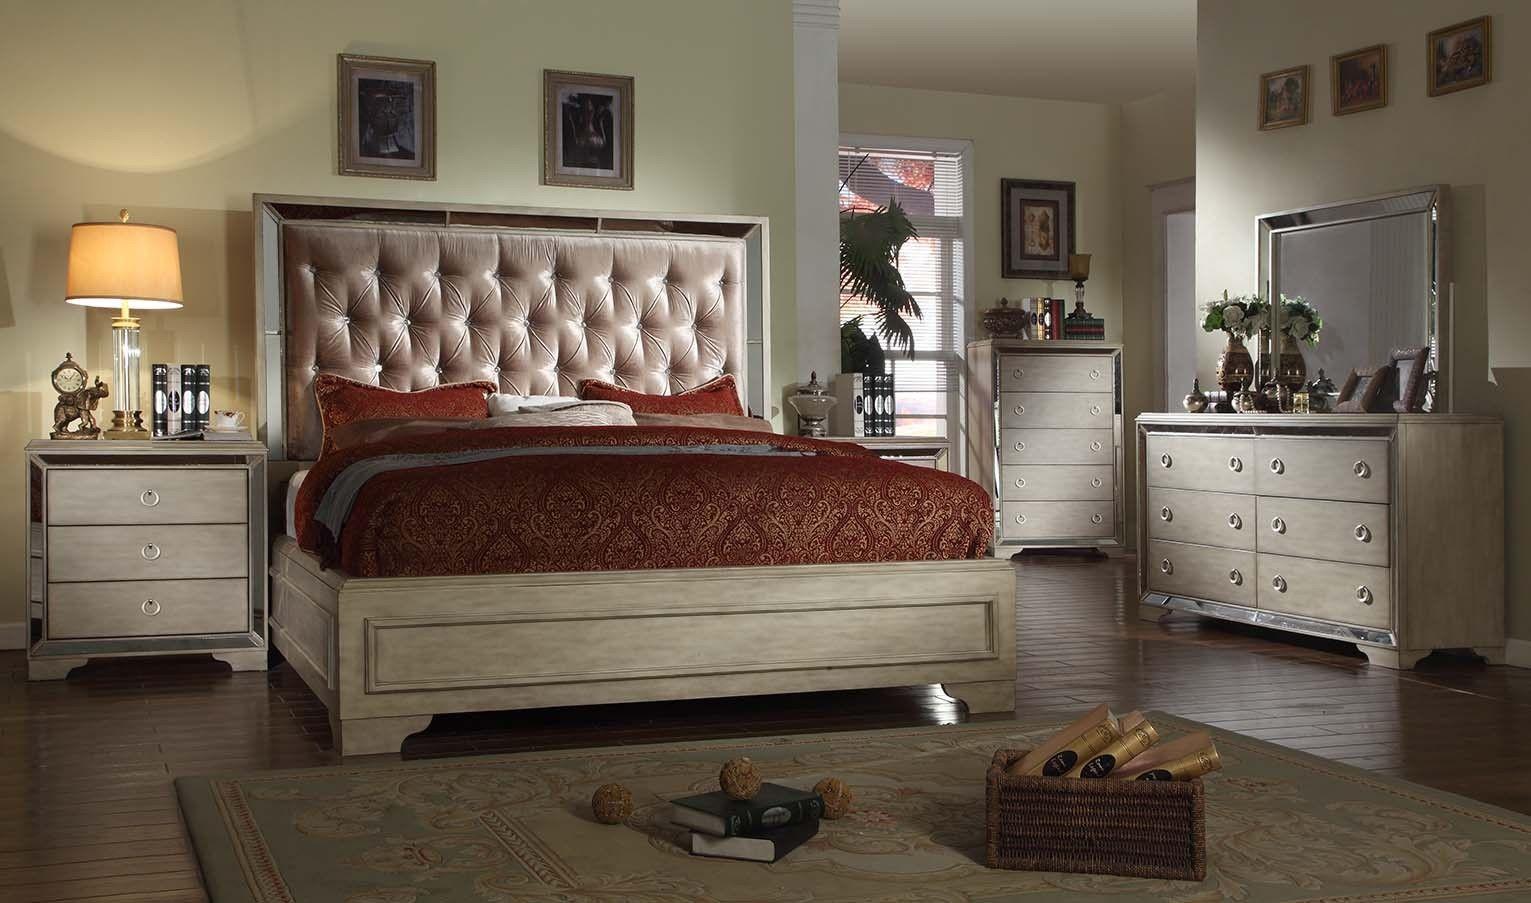 

    
Mcferran B9805 Imperial Premium Leather Eastern King Size Bedroom Set 3 Pcs
